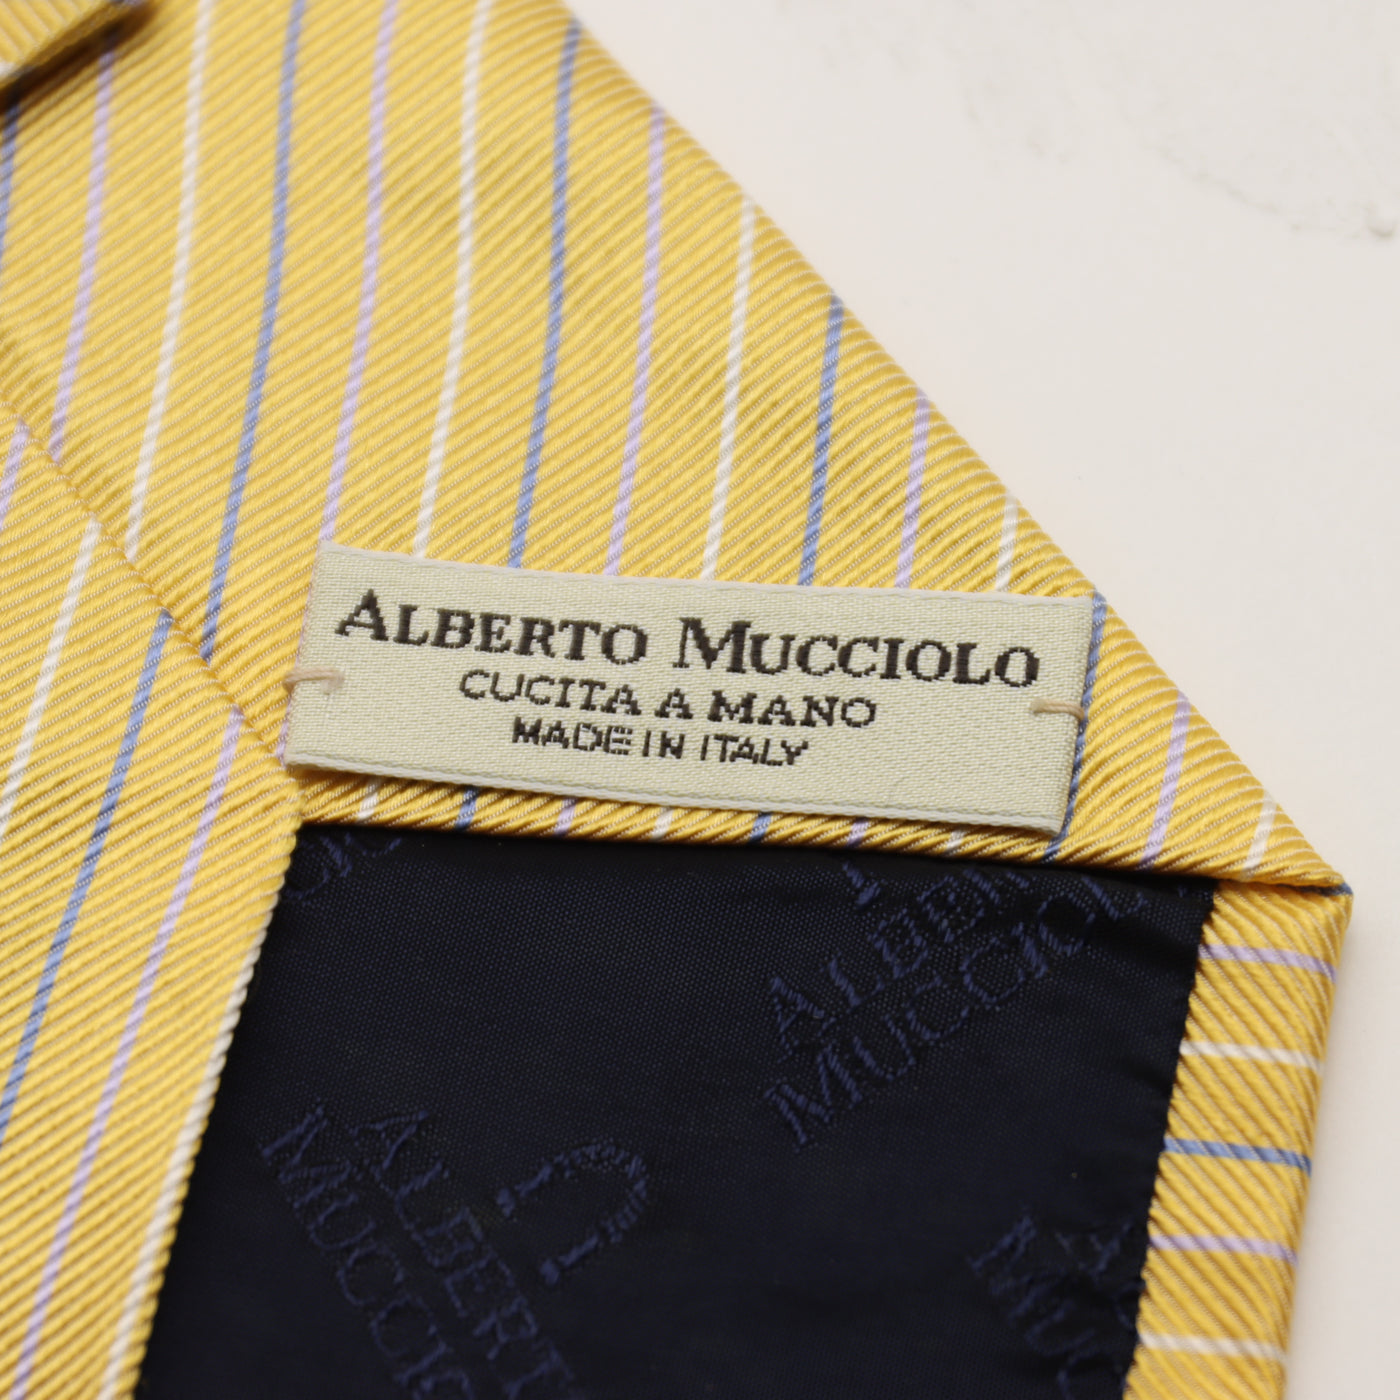 Alberto Mucciolo Cravatta Uomo Vintage Oro 100% Seta